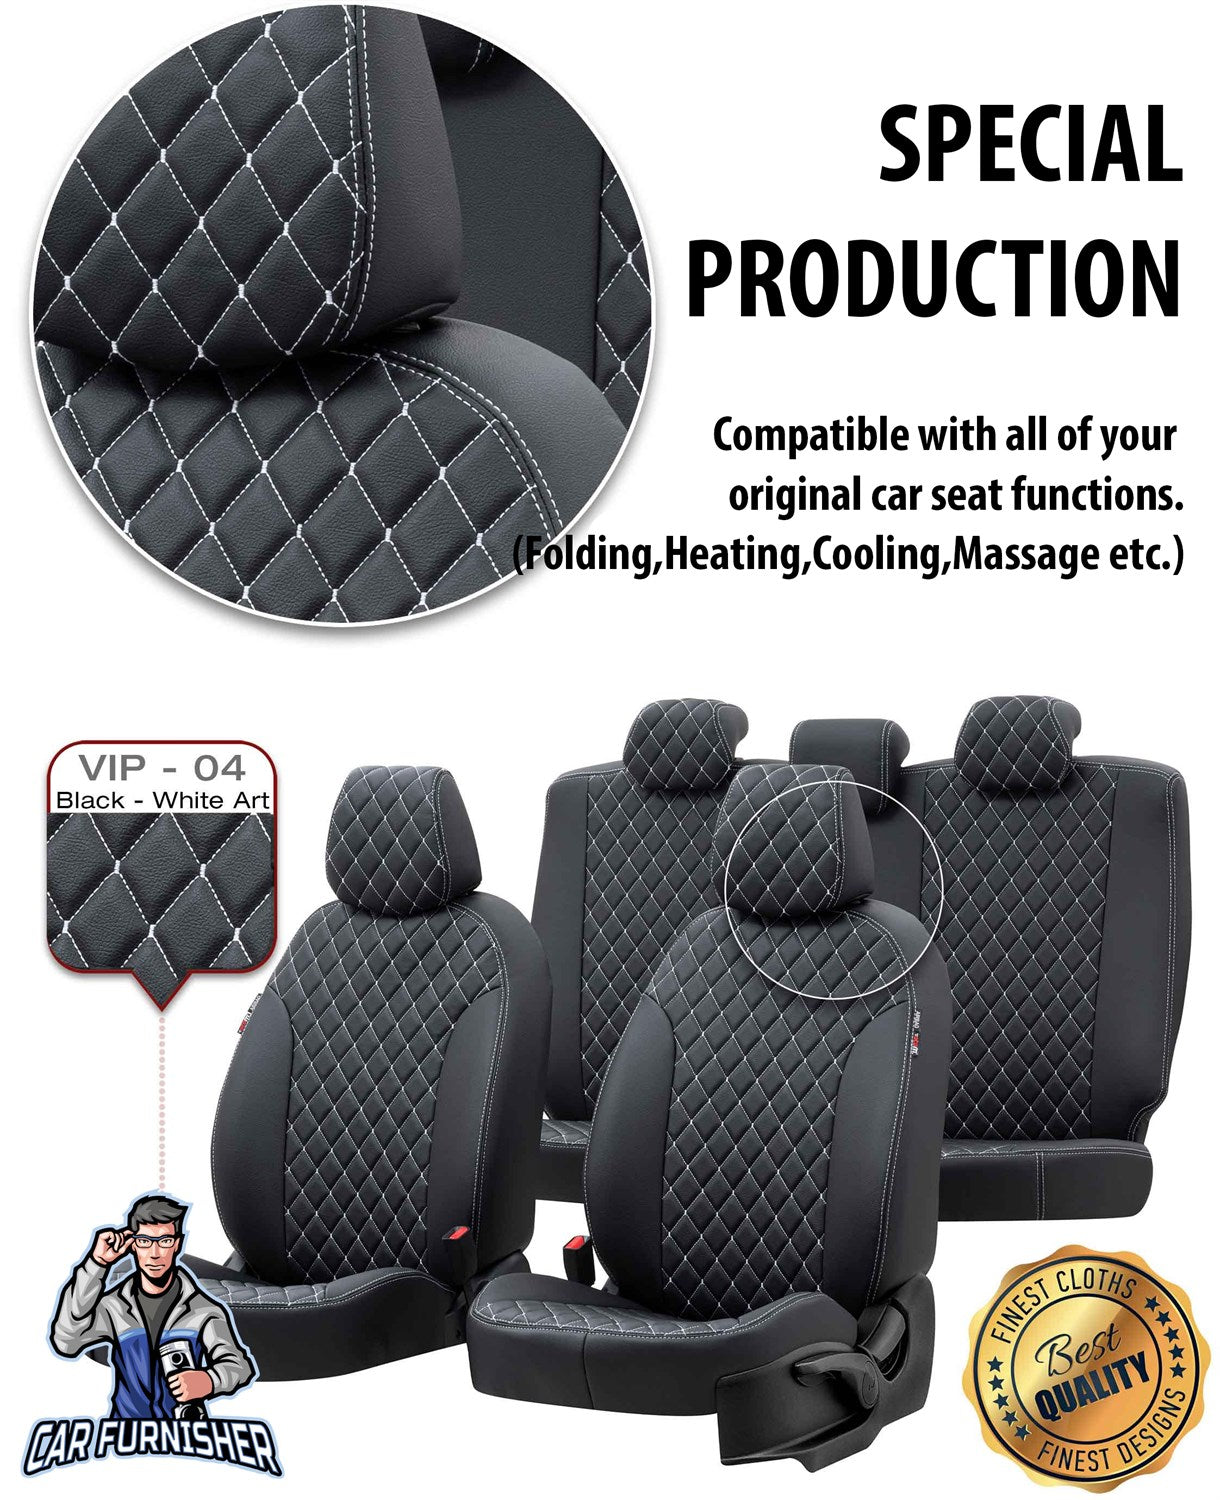 Audi Q7 Seat Cover Madrid Leather Design Beige Leather